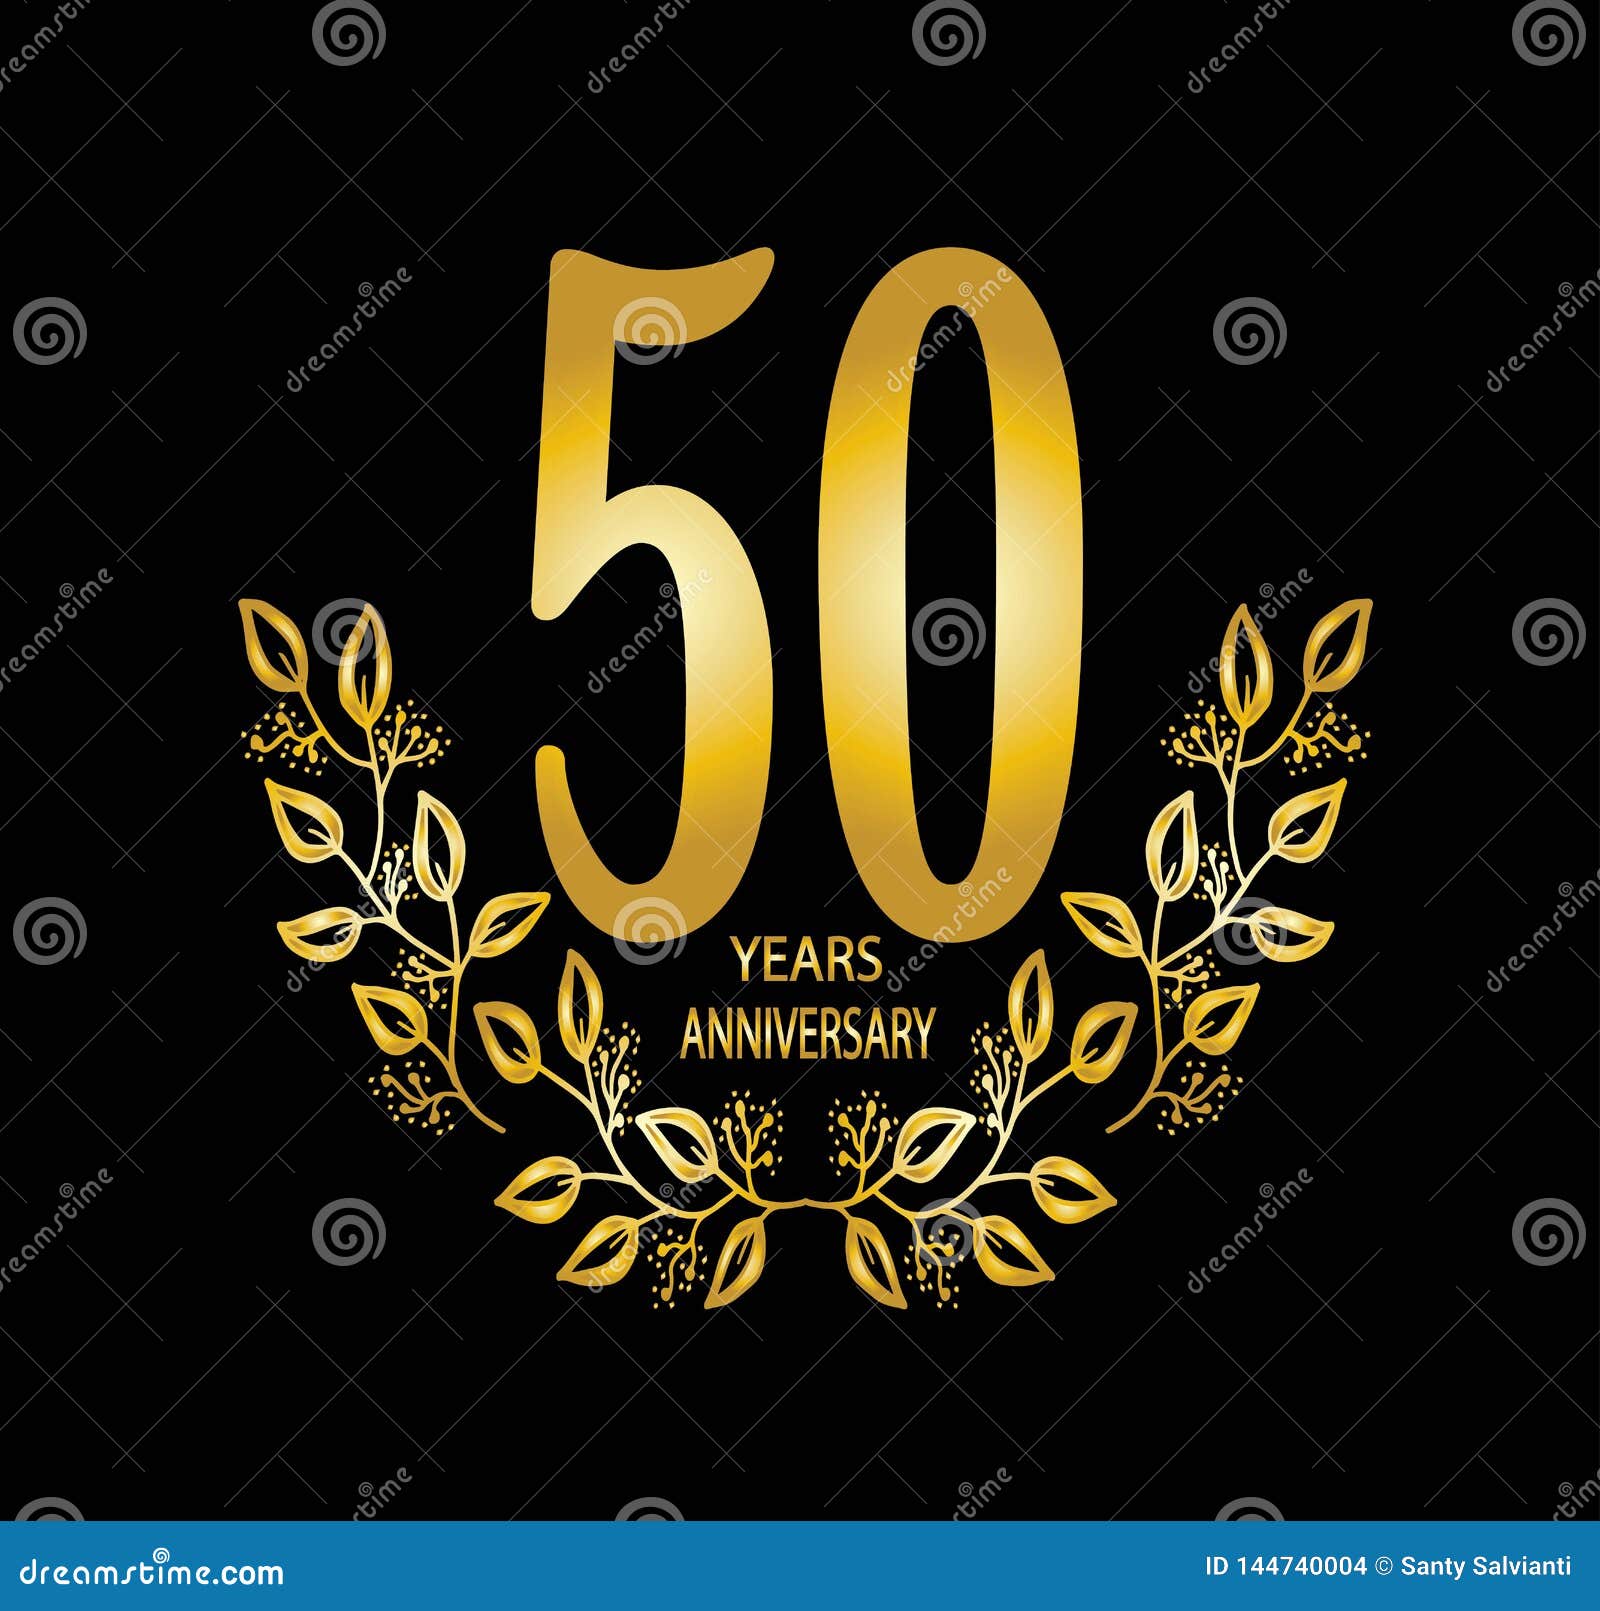 50 Year Anniversary Celebration Card - Vector Illustration Stock ...